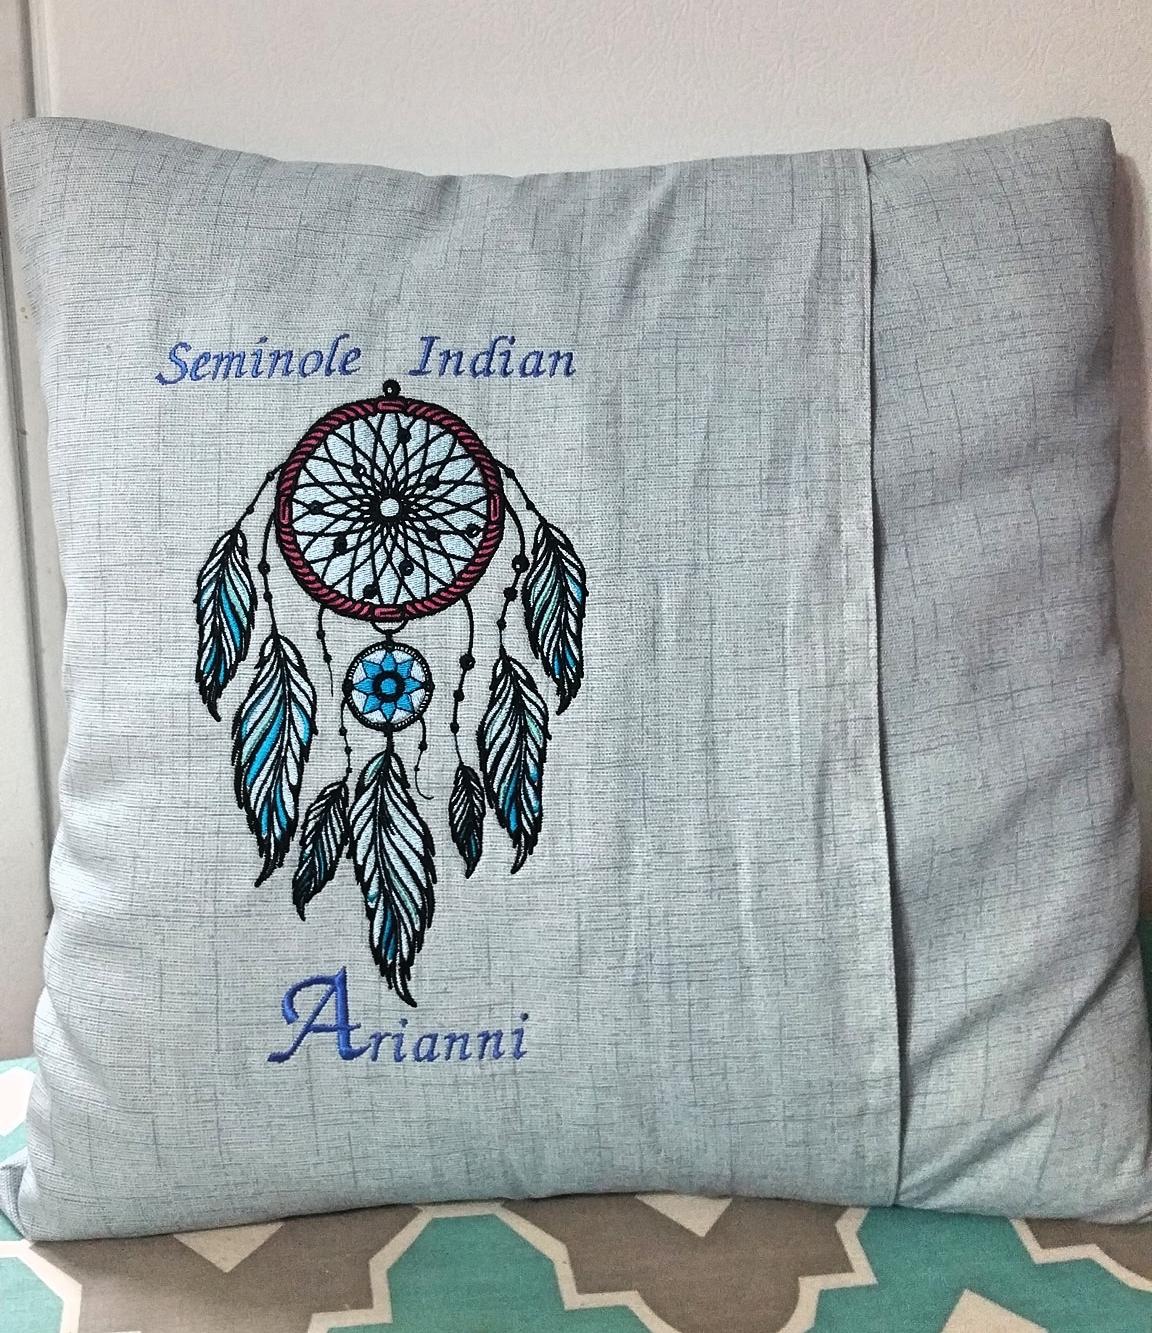 Embroidered cushion with Seminole dreamcatcher design